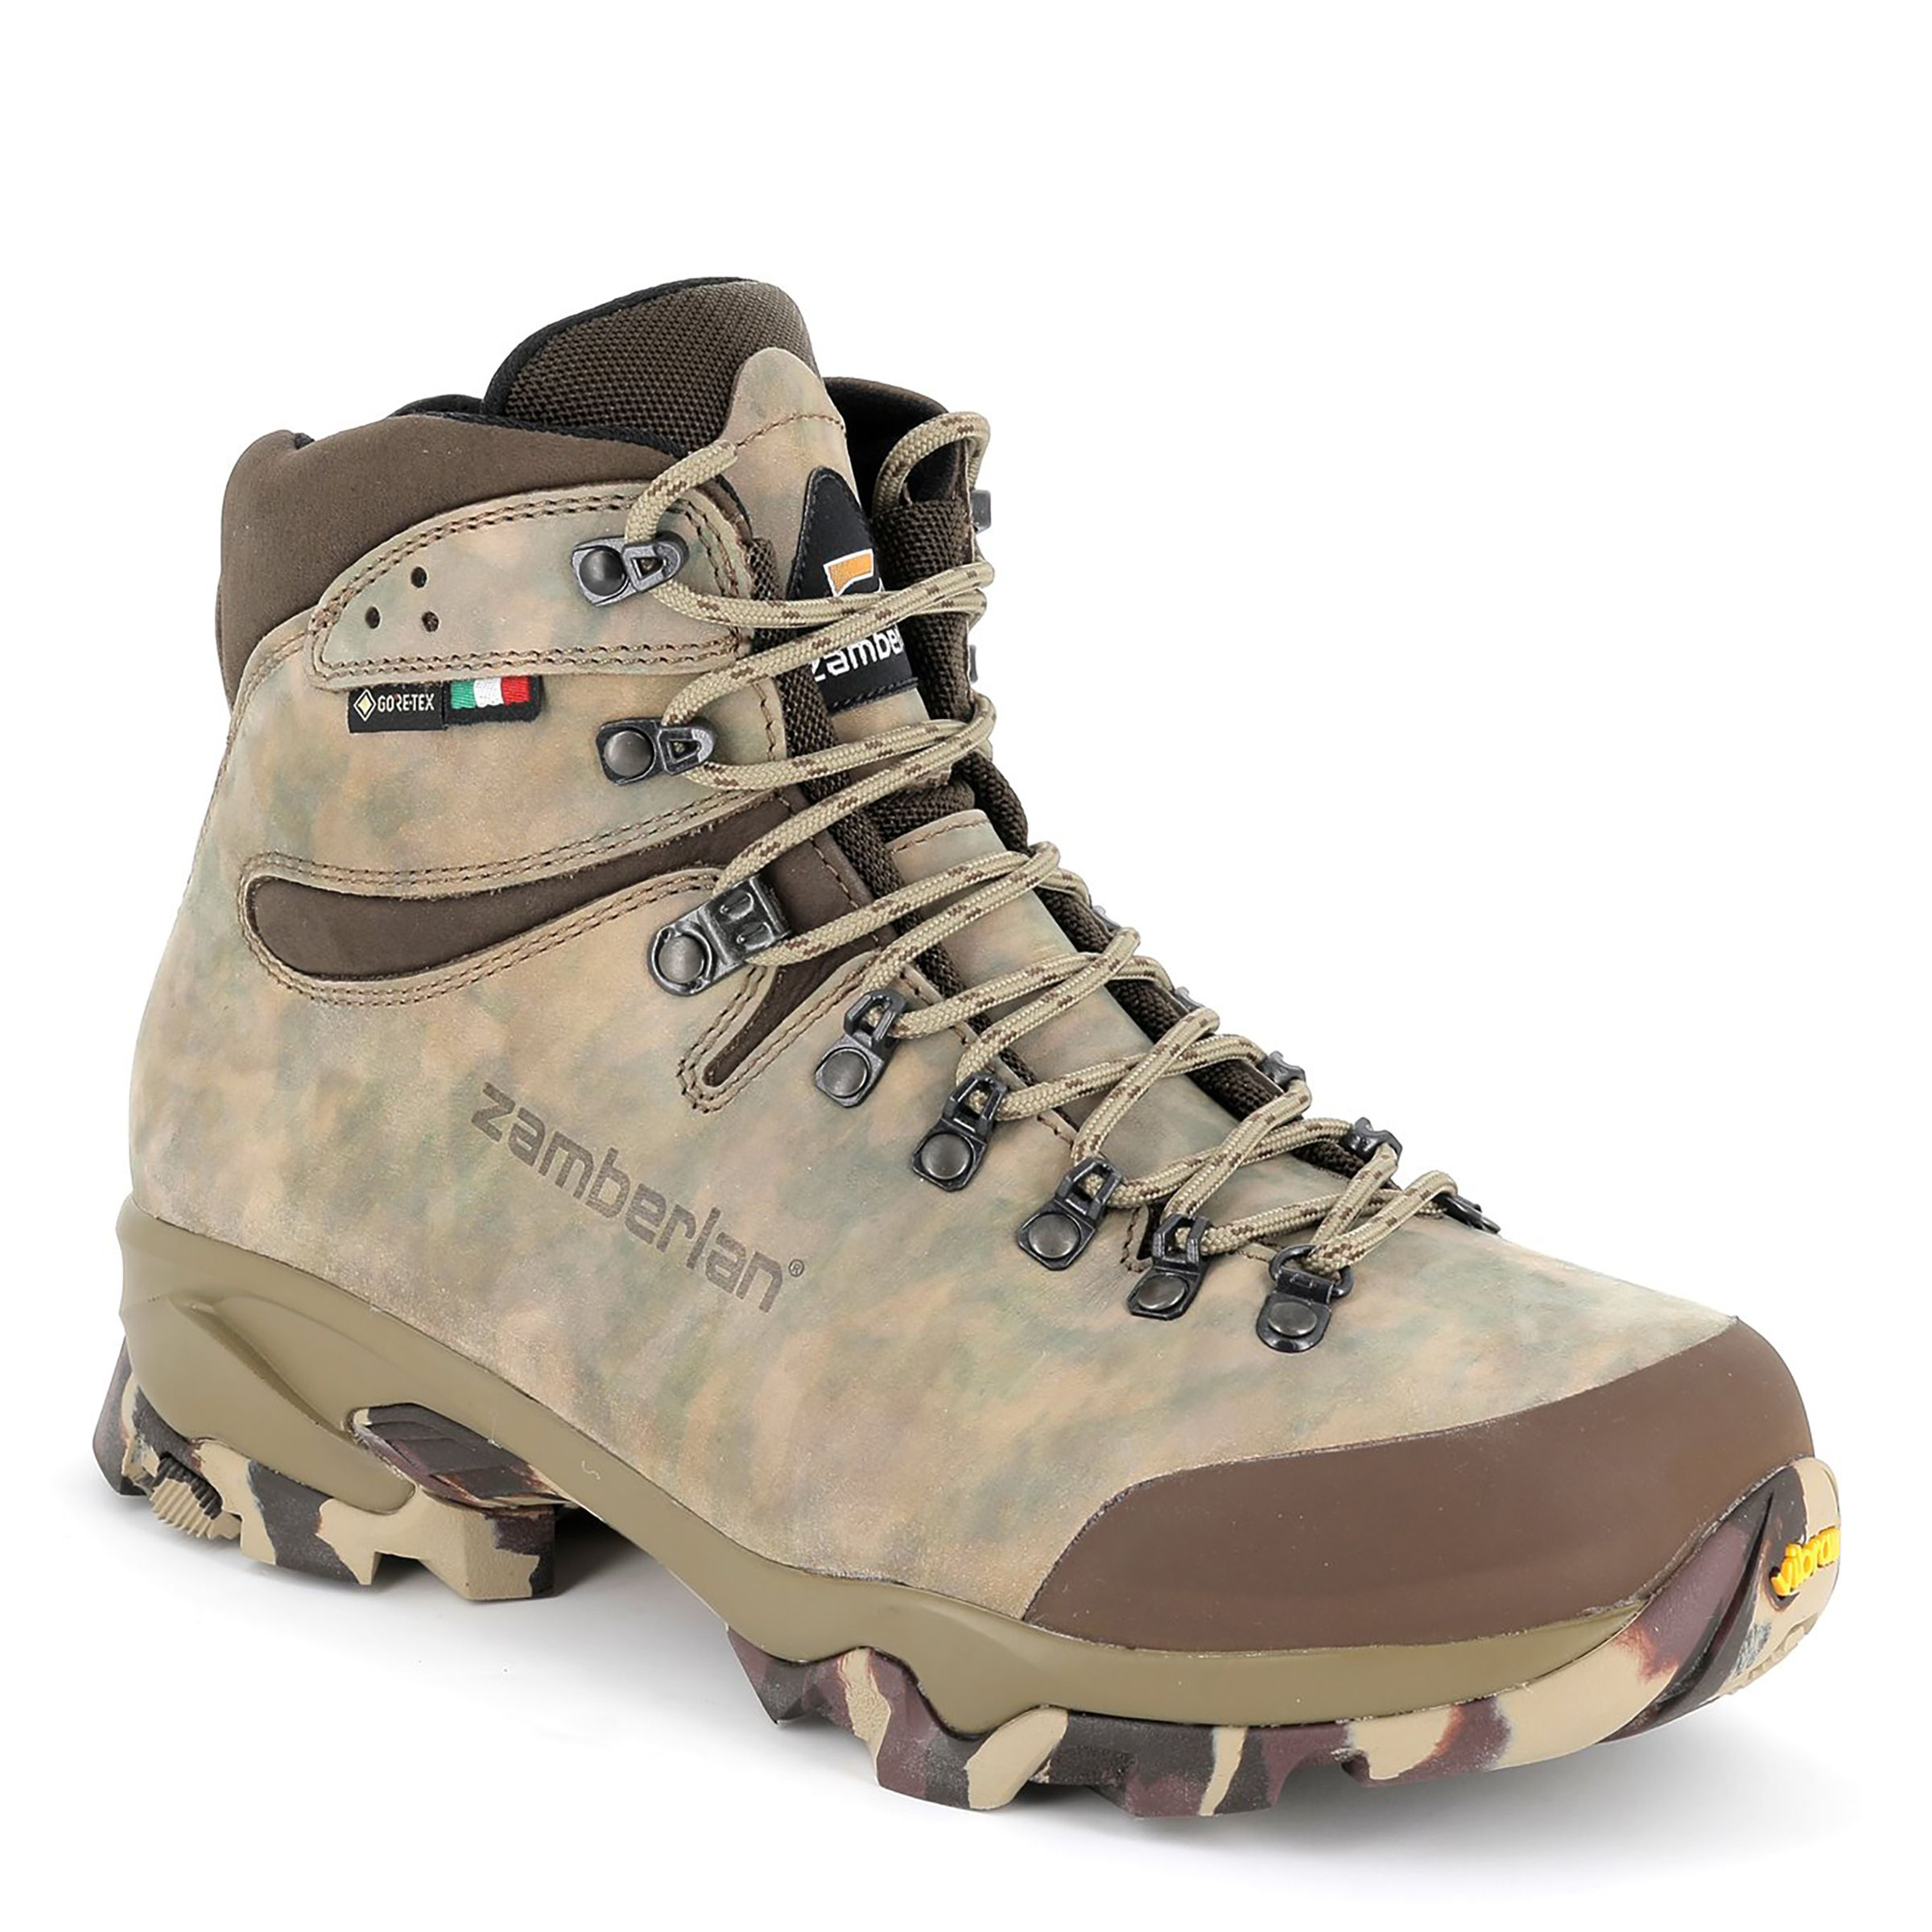 Zamberlan 1213 Leopard GTX RR GORE-TEX Hunting Boots for Men - Beige - 8.5W